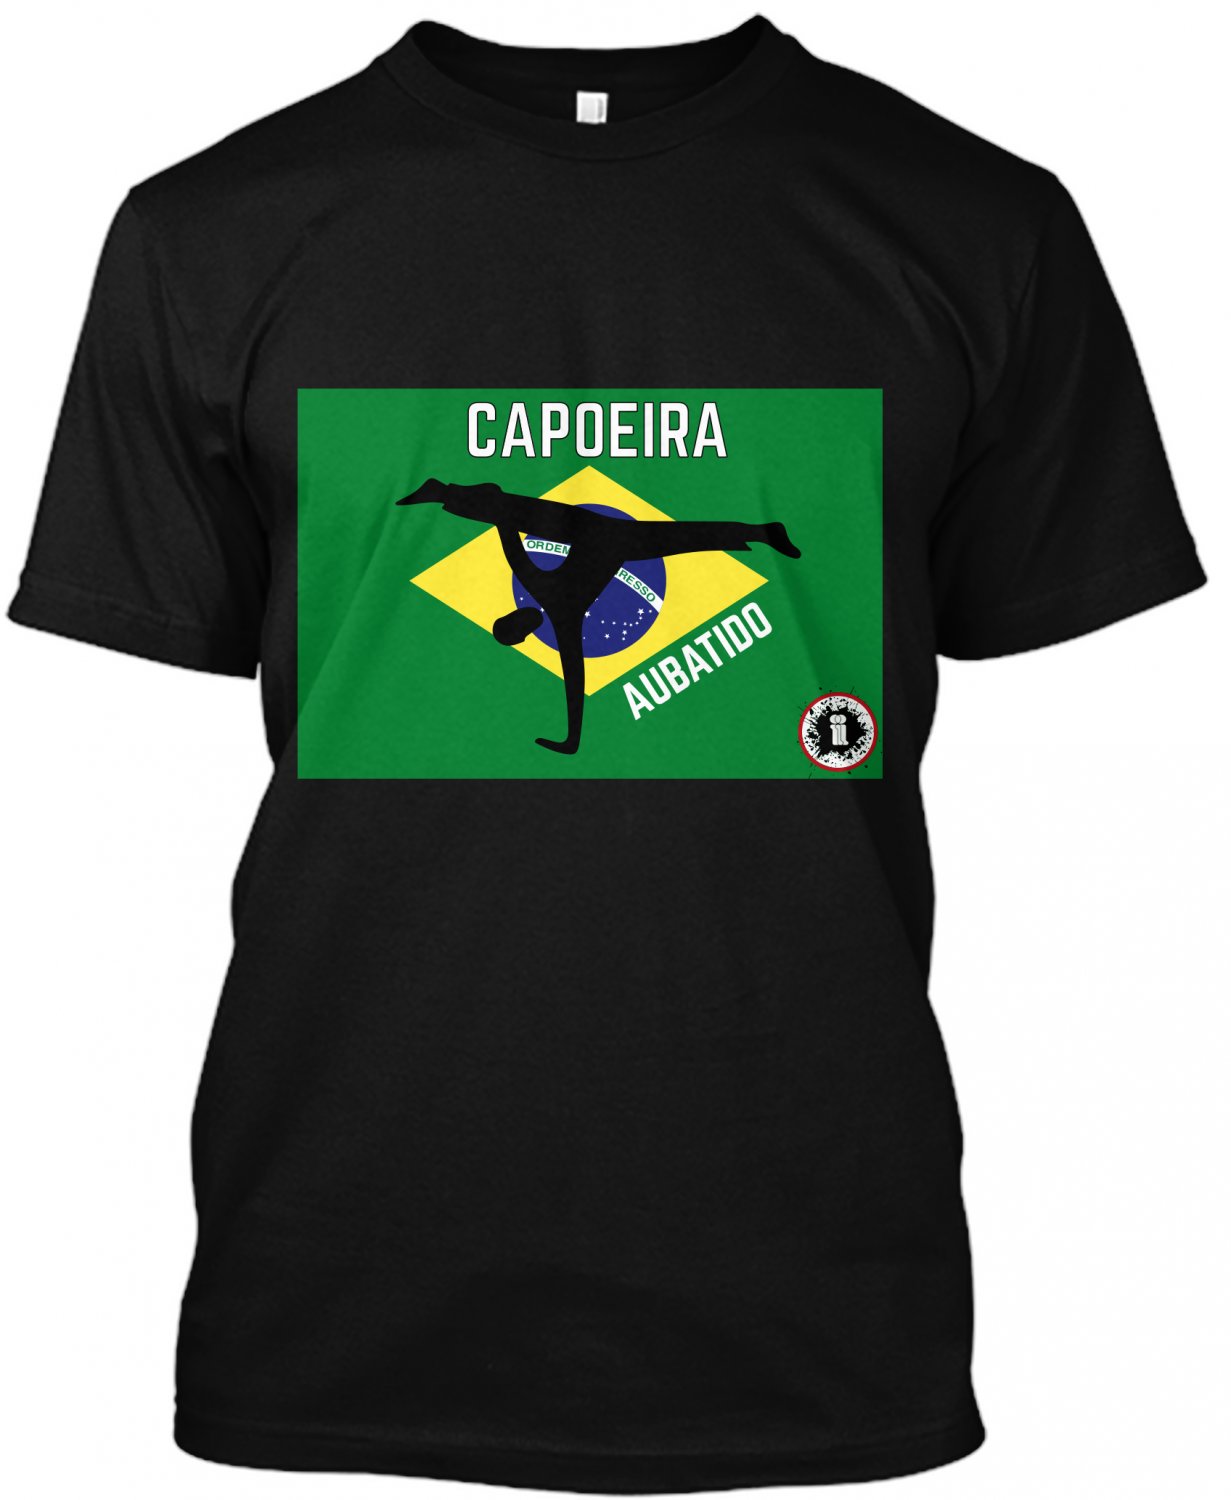 AT1700A-L  Brazilian Capoeira Aubatido Martial Arts T-Shirt Black african dance fighting